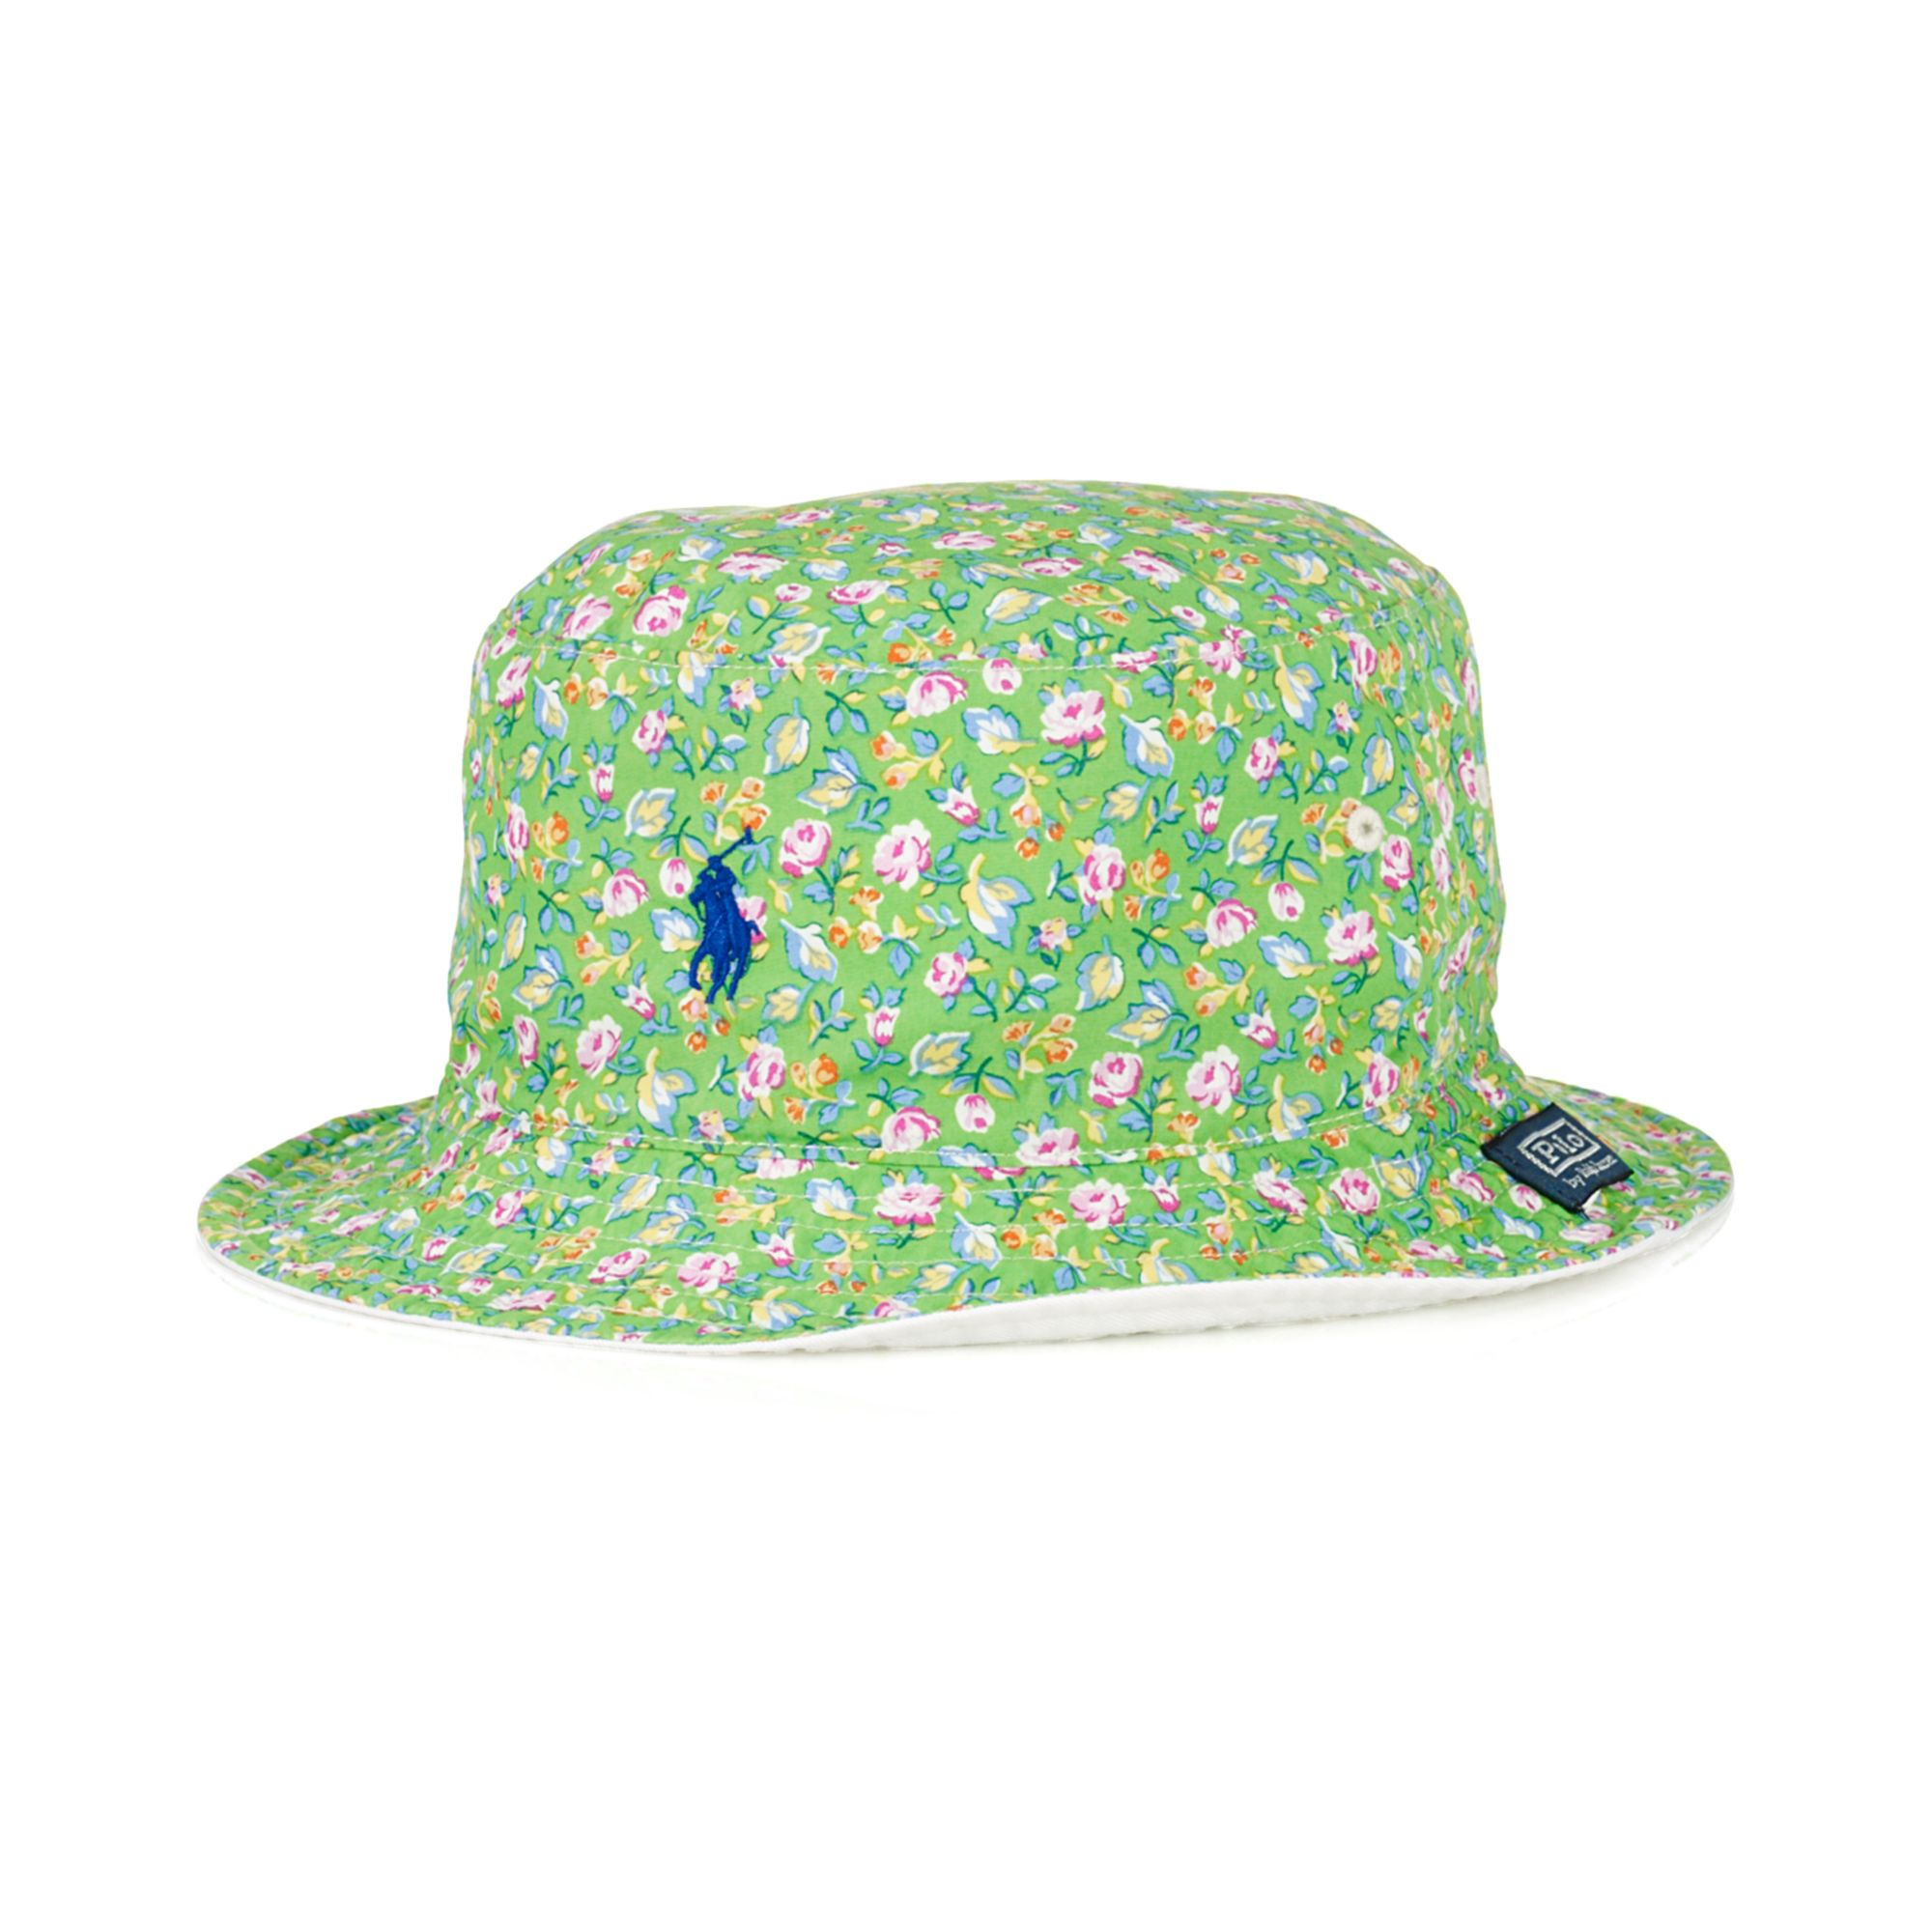 Lyst - Ralph Lauren Polo Reversible Floralprint Bucket Hat in Green for Men